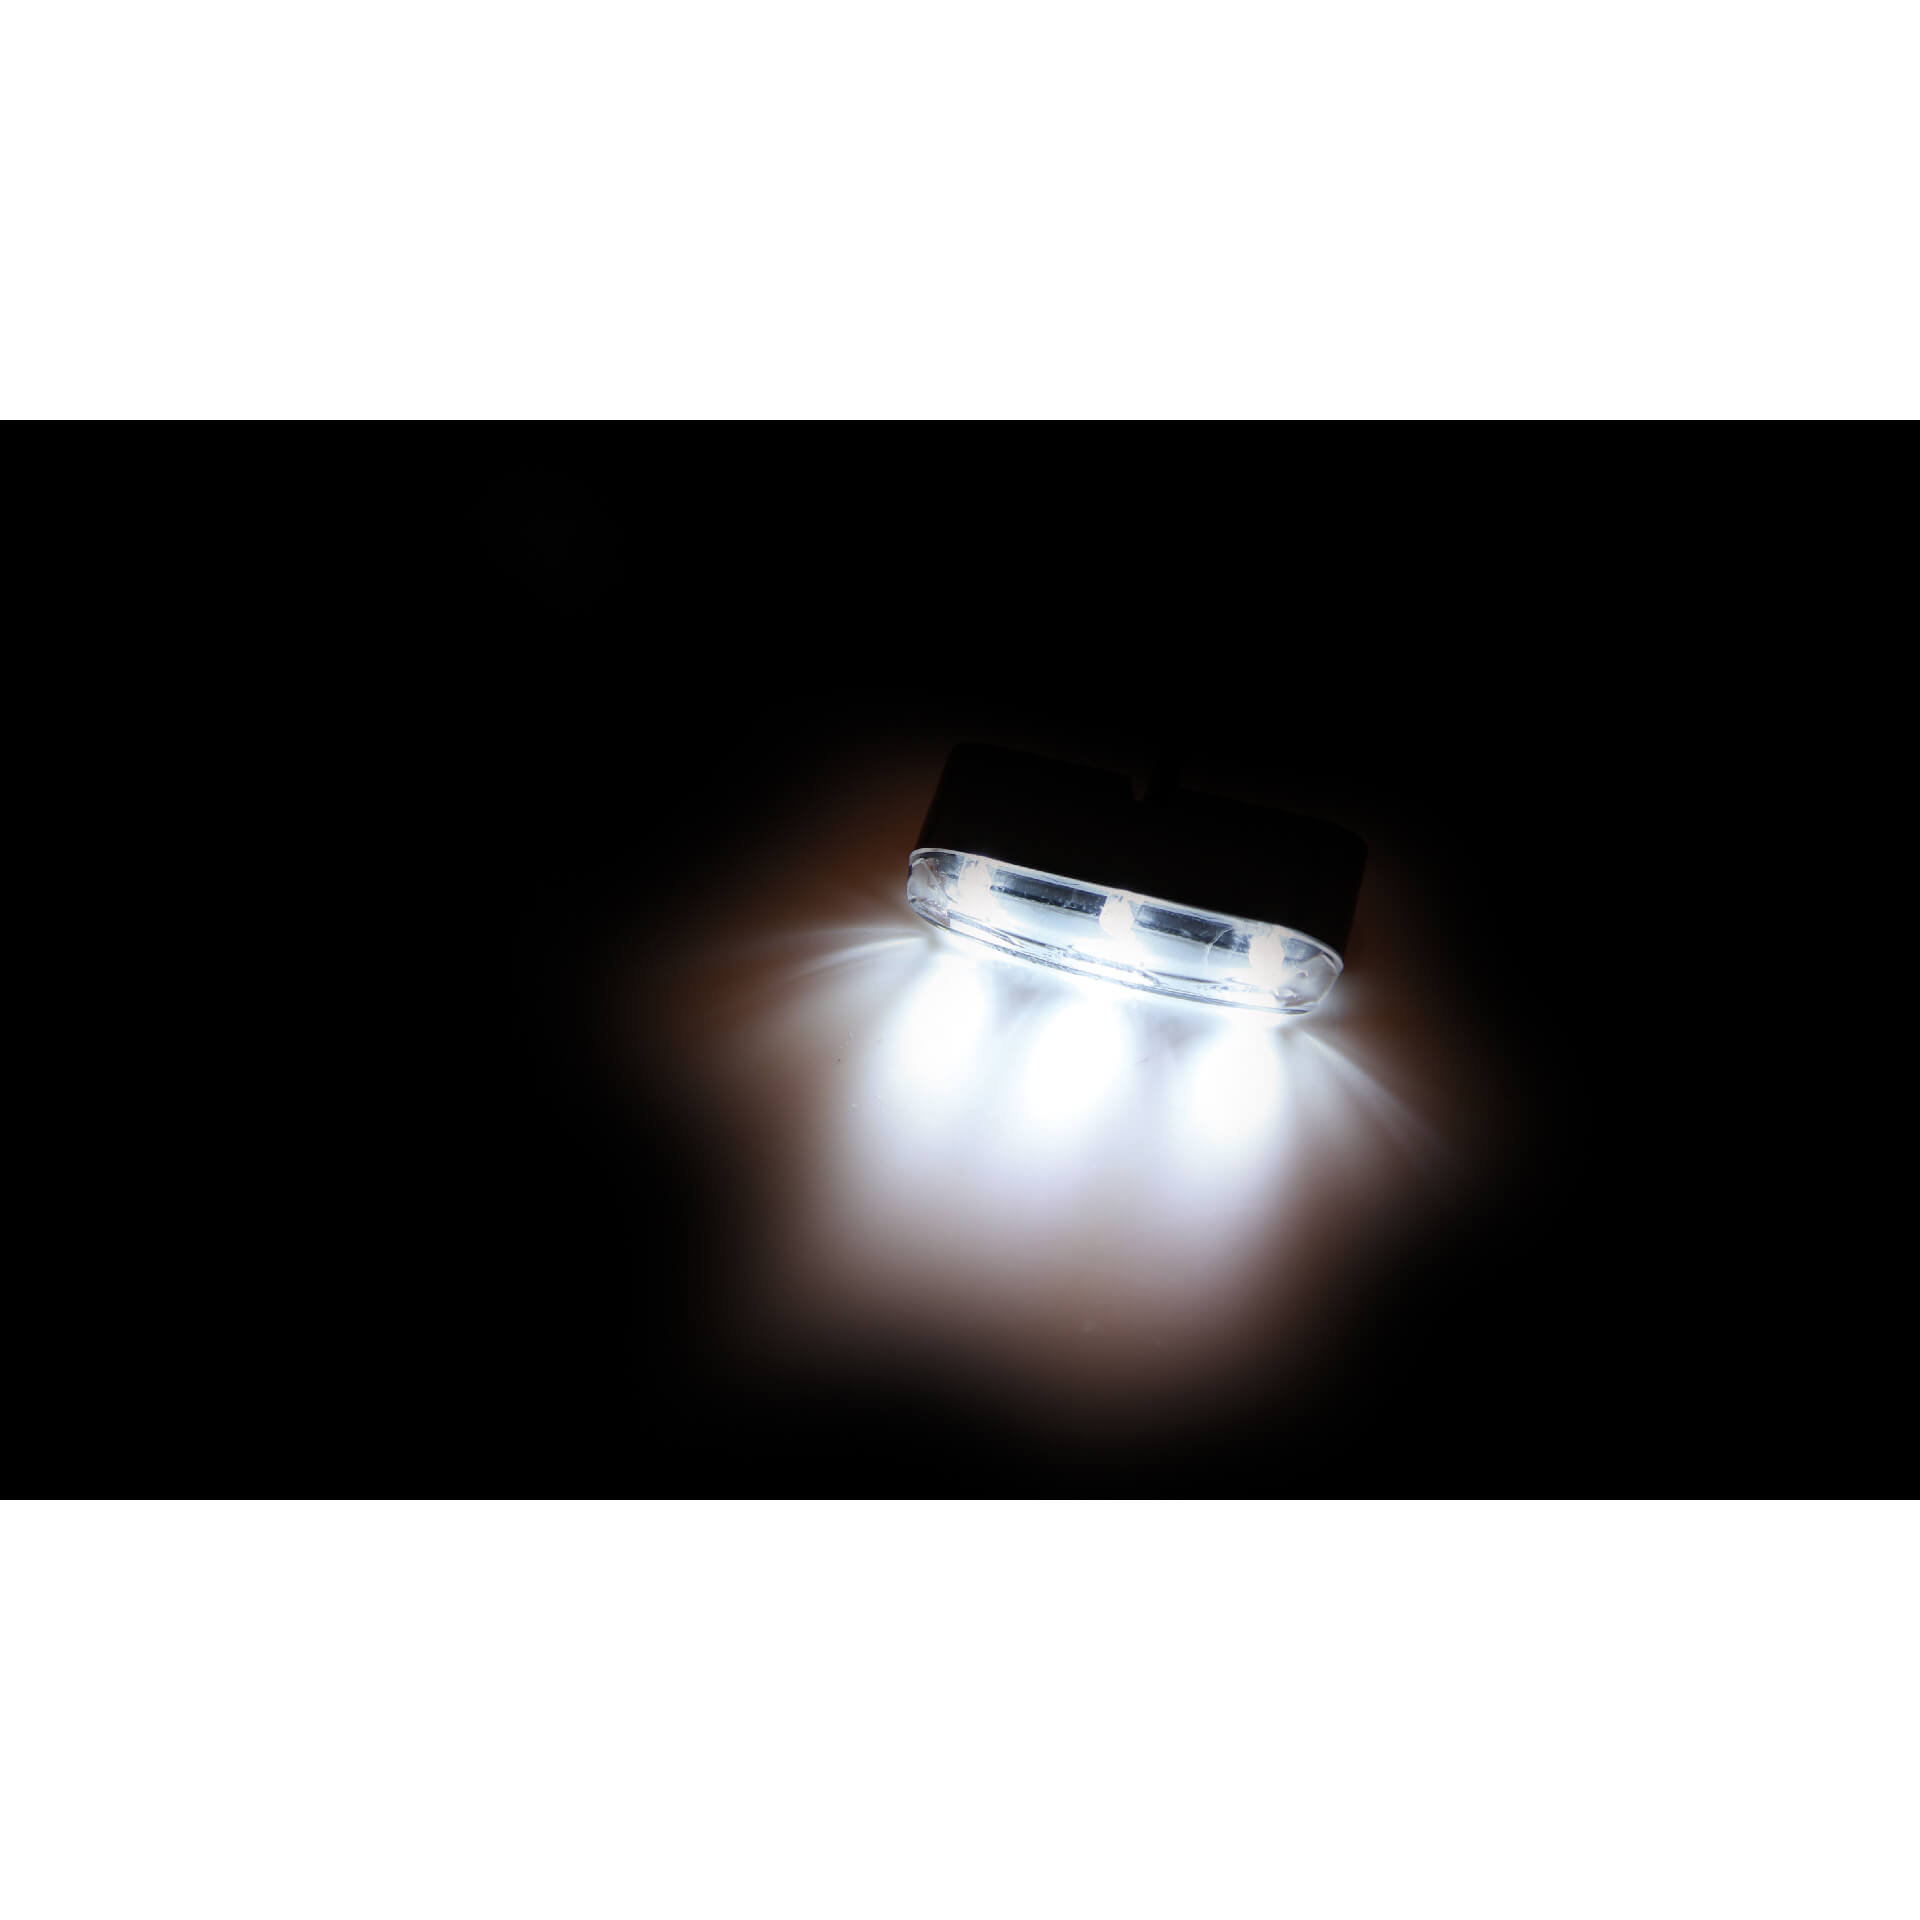 shin_yo Universal TRI LED Standlicht mit Halter und selbstklebender Folie, 12V